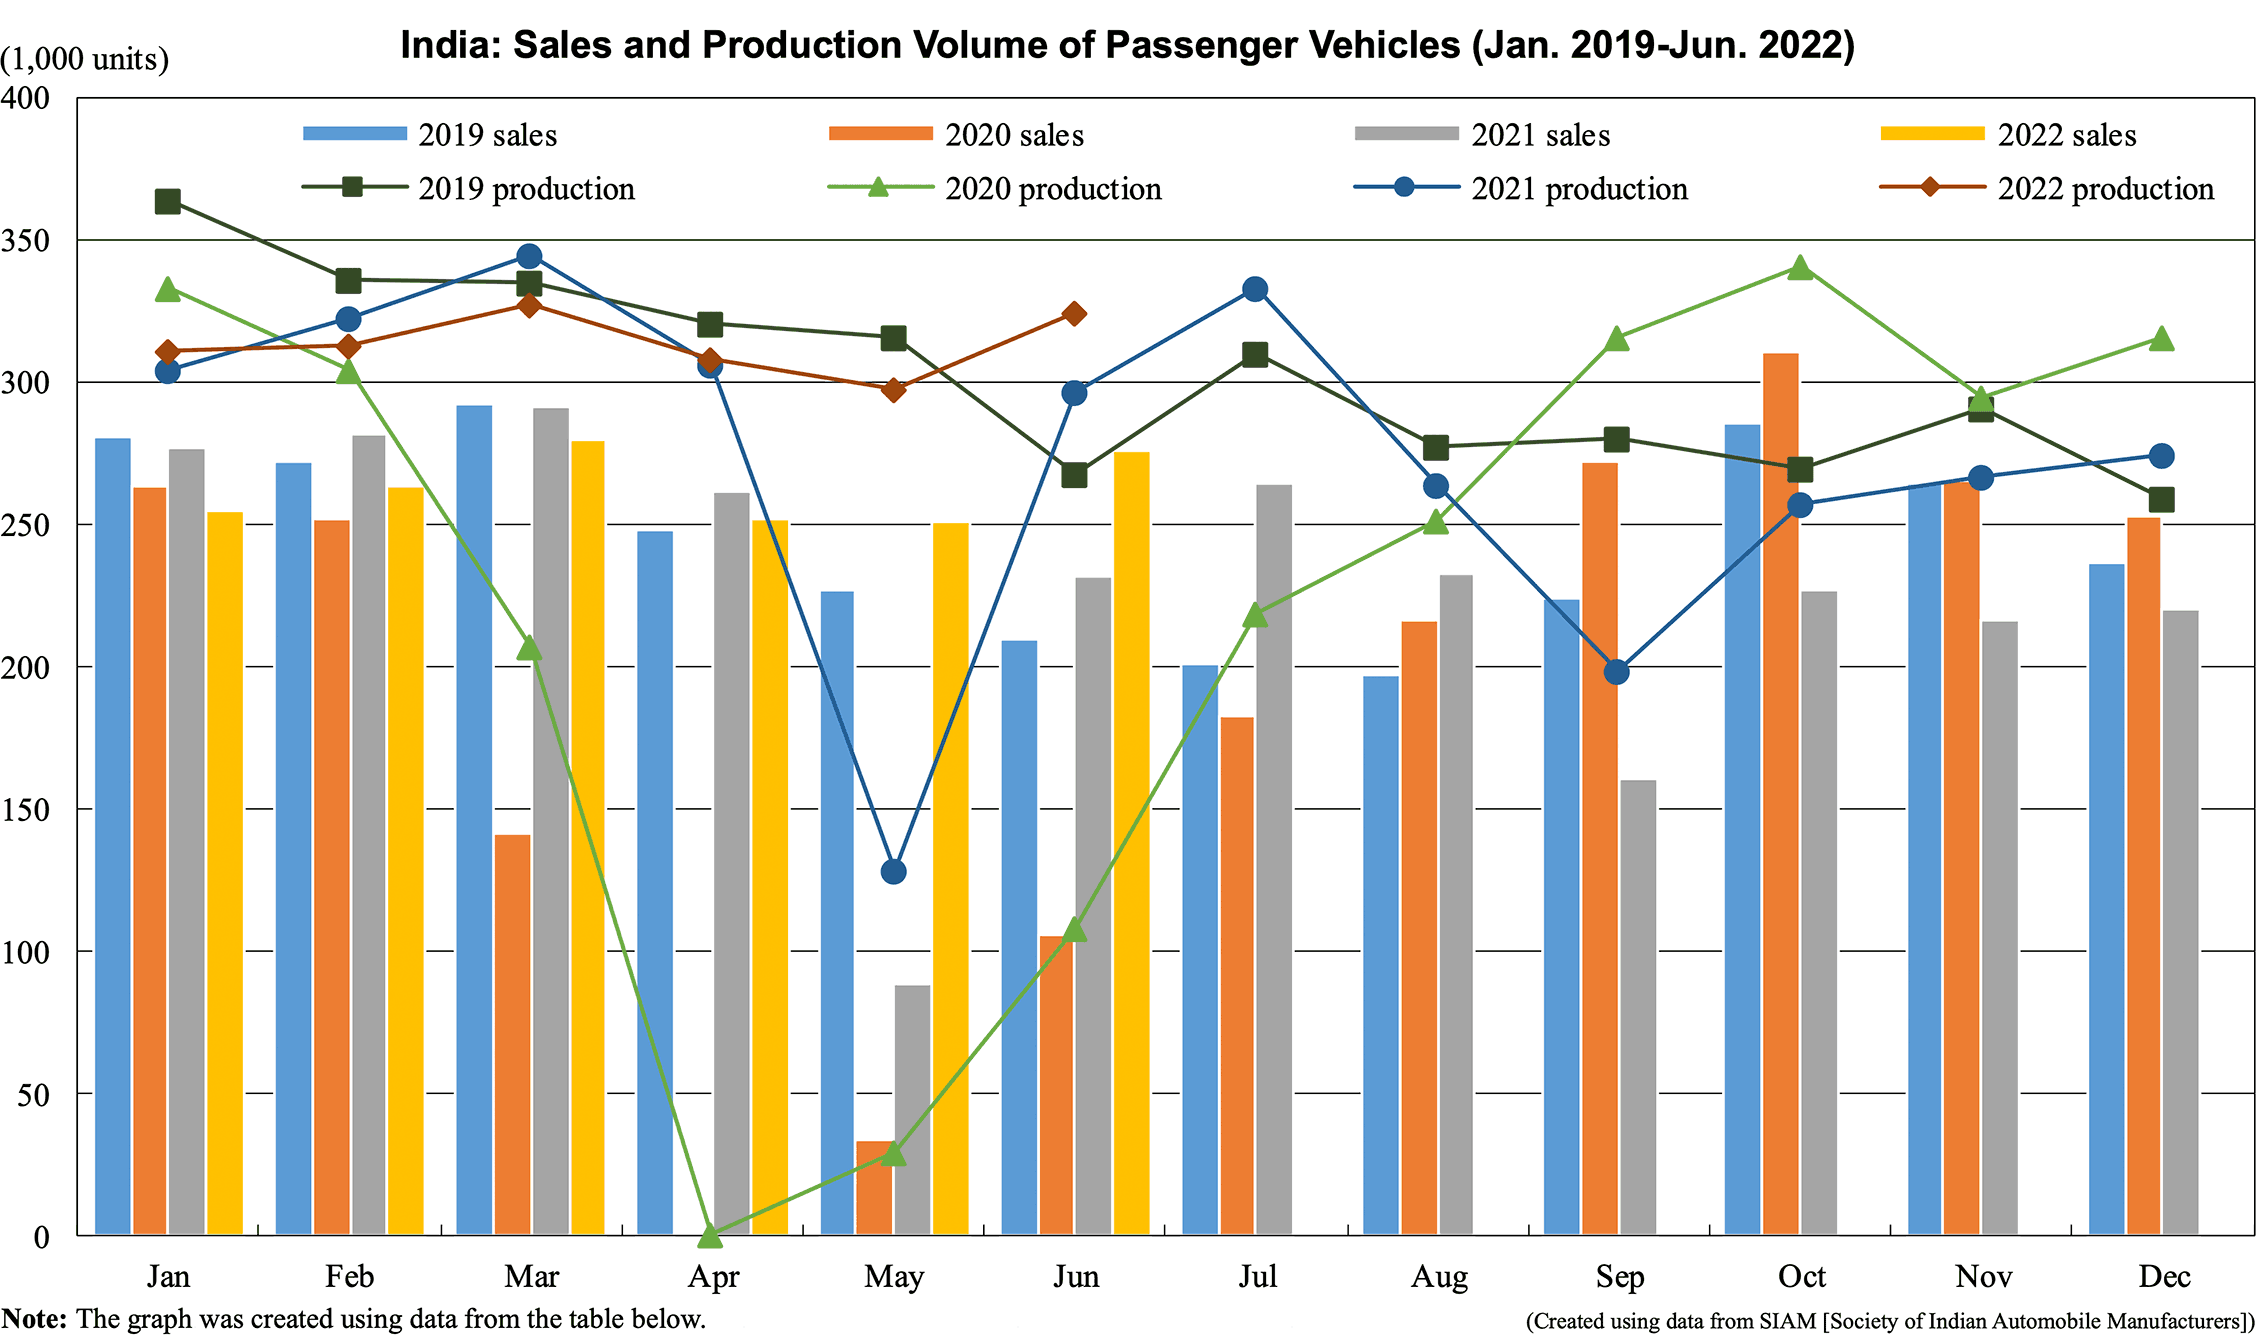 India: Sales and Production Volume of Passenger Vehicles (Jan. 2019-Jun. 2022)